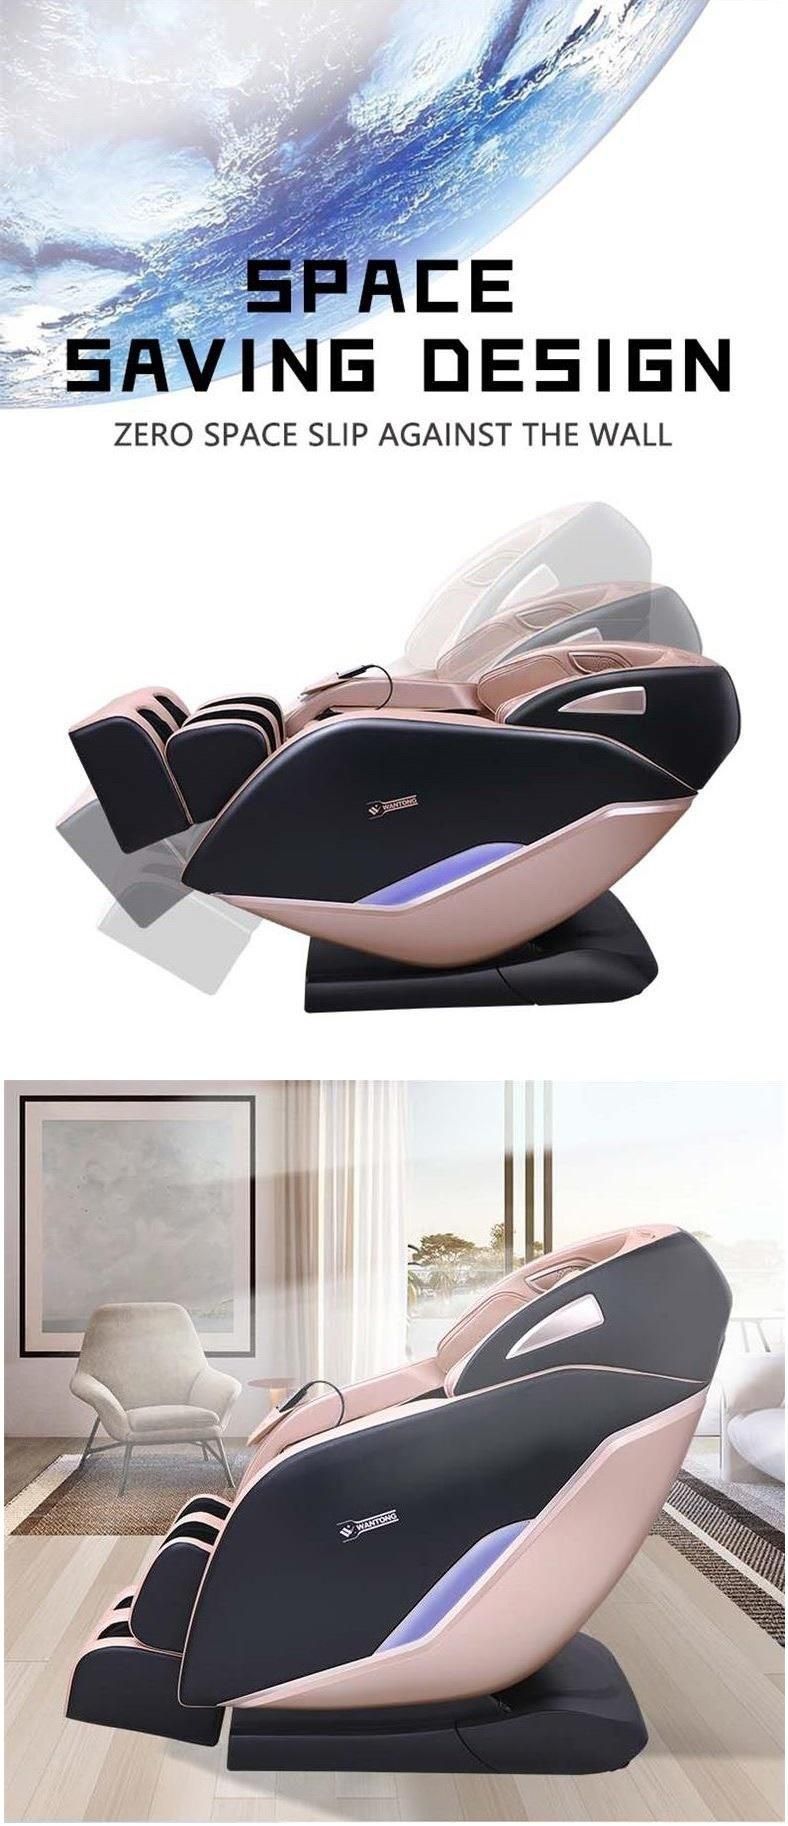 Wantong Luxury 4D Zero Gravity Shiatsu Roller Full Body Massage Chair